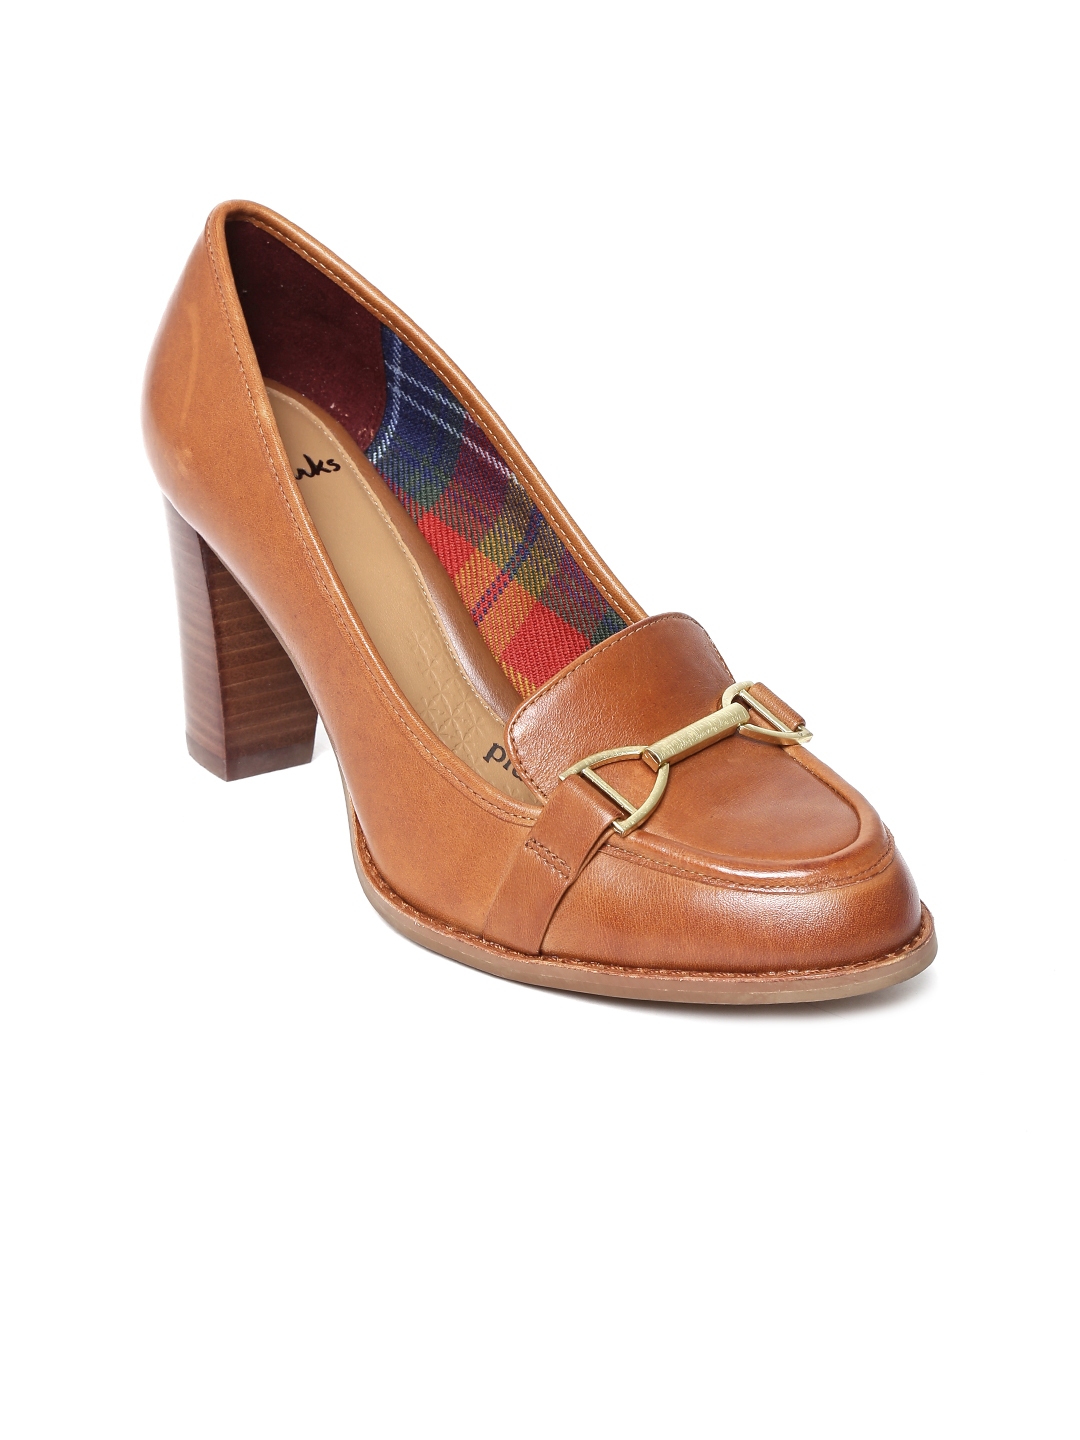 Buy Clarks Women Leather Tan Brown Heels - Heels for Women 590684 | Myntra